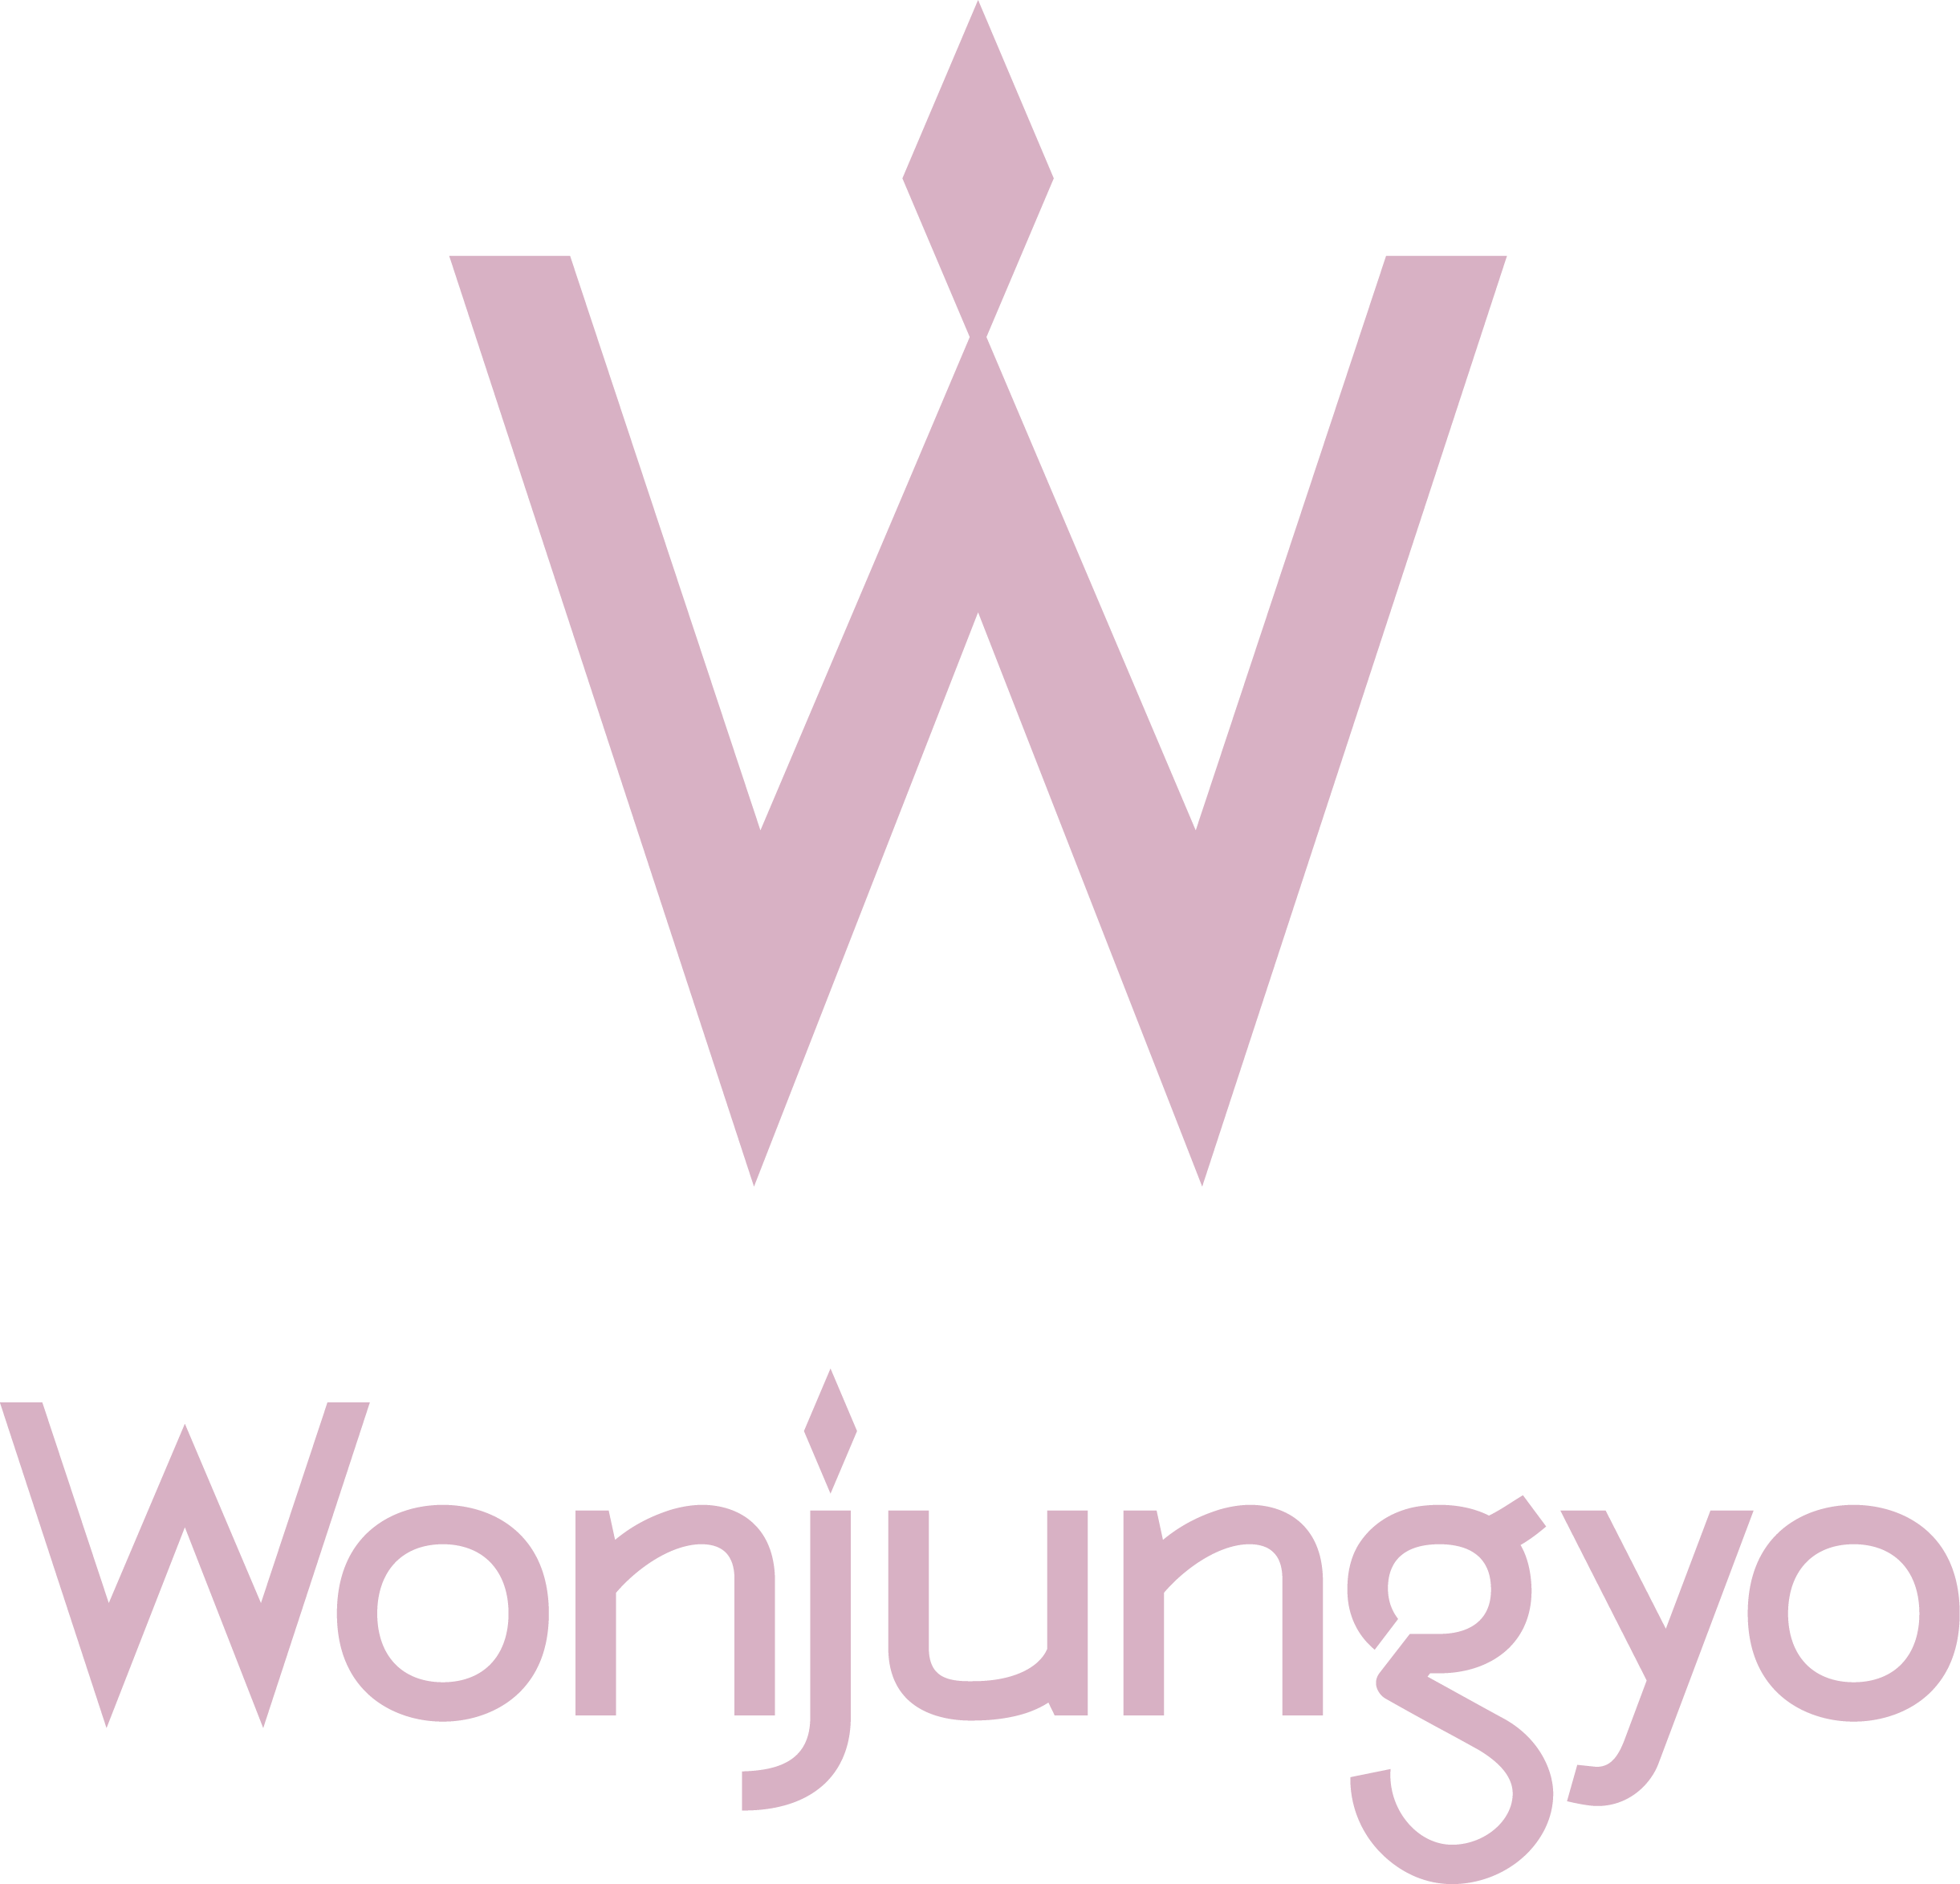 Wonjungyo ブランドロゴ・ブランドコンセプト